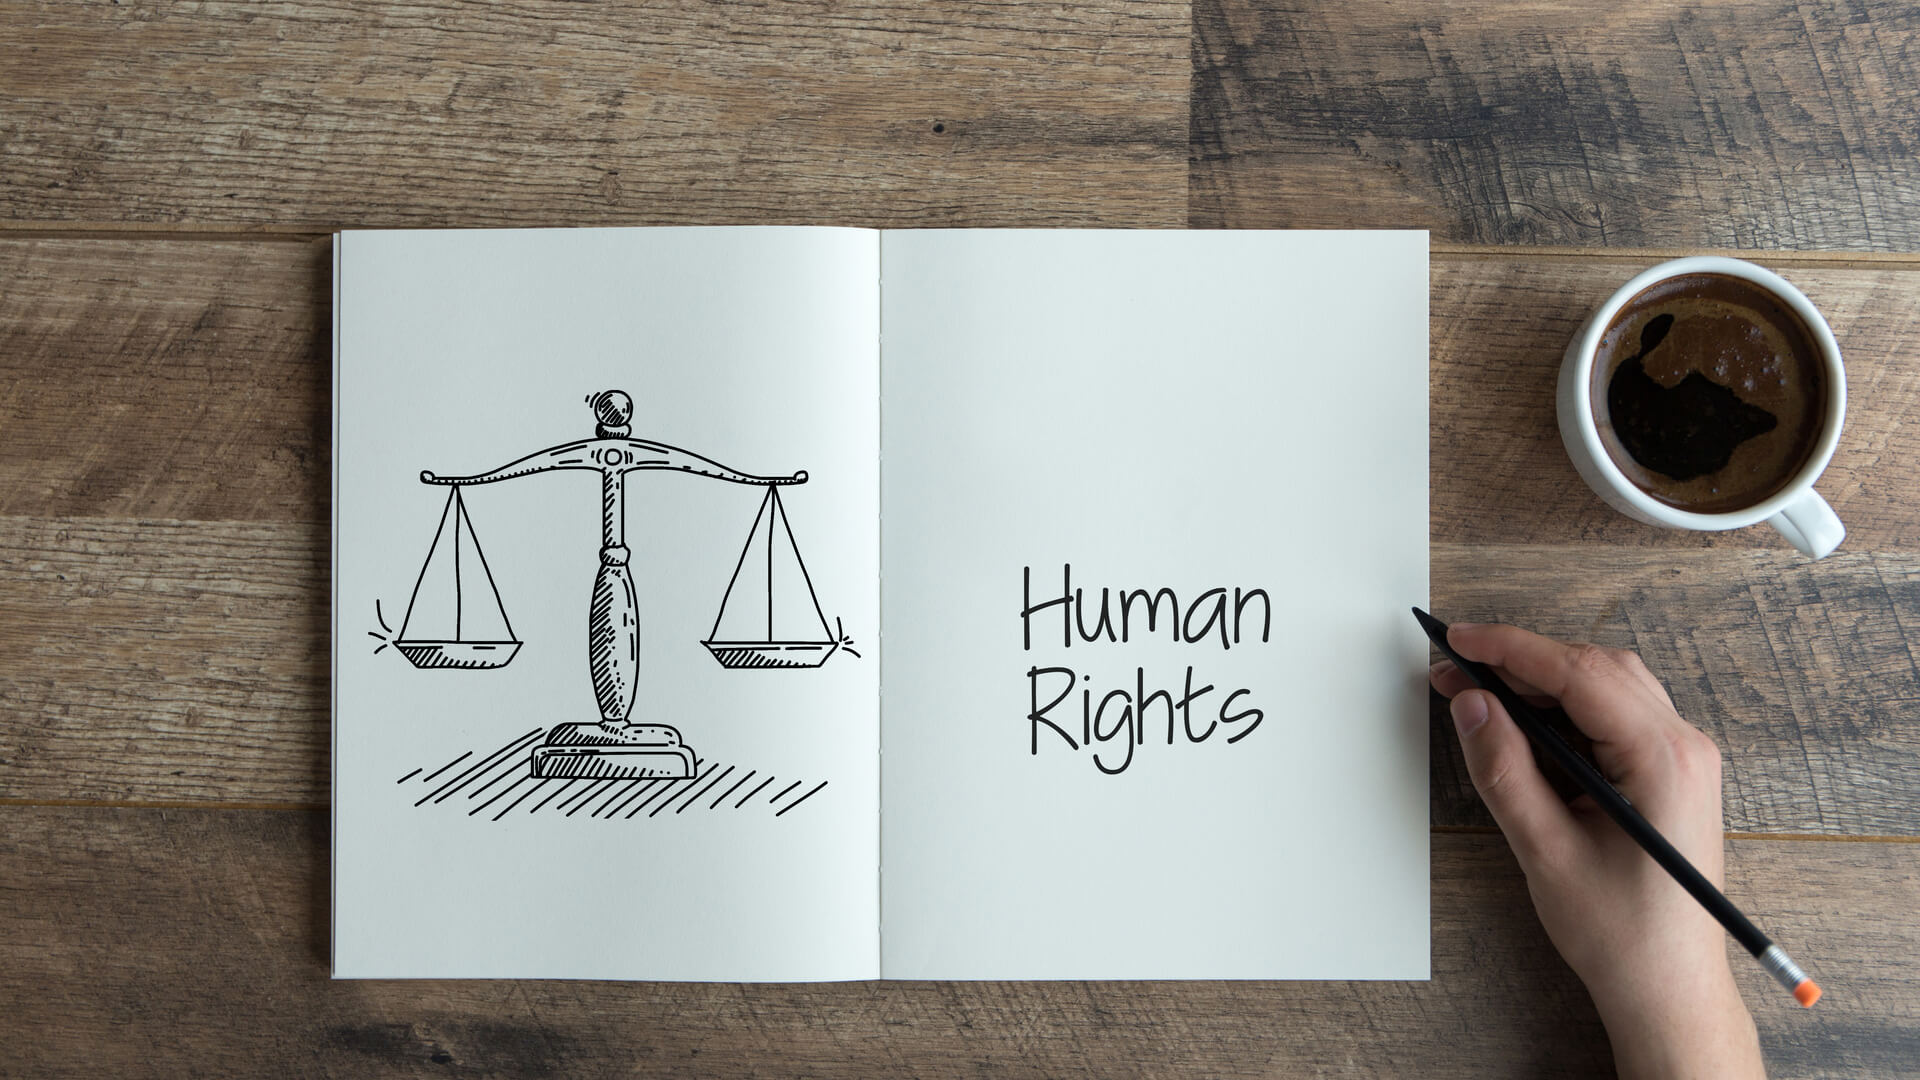 Human Rights Studies